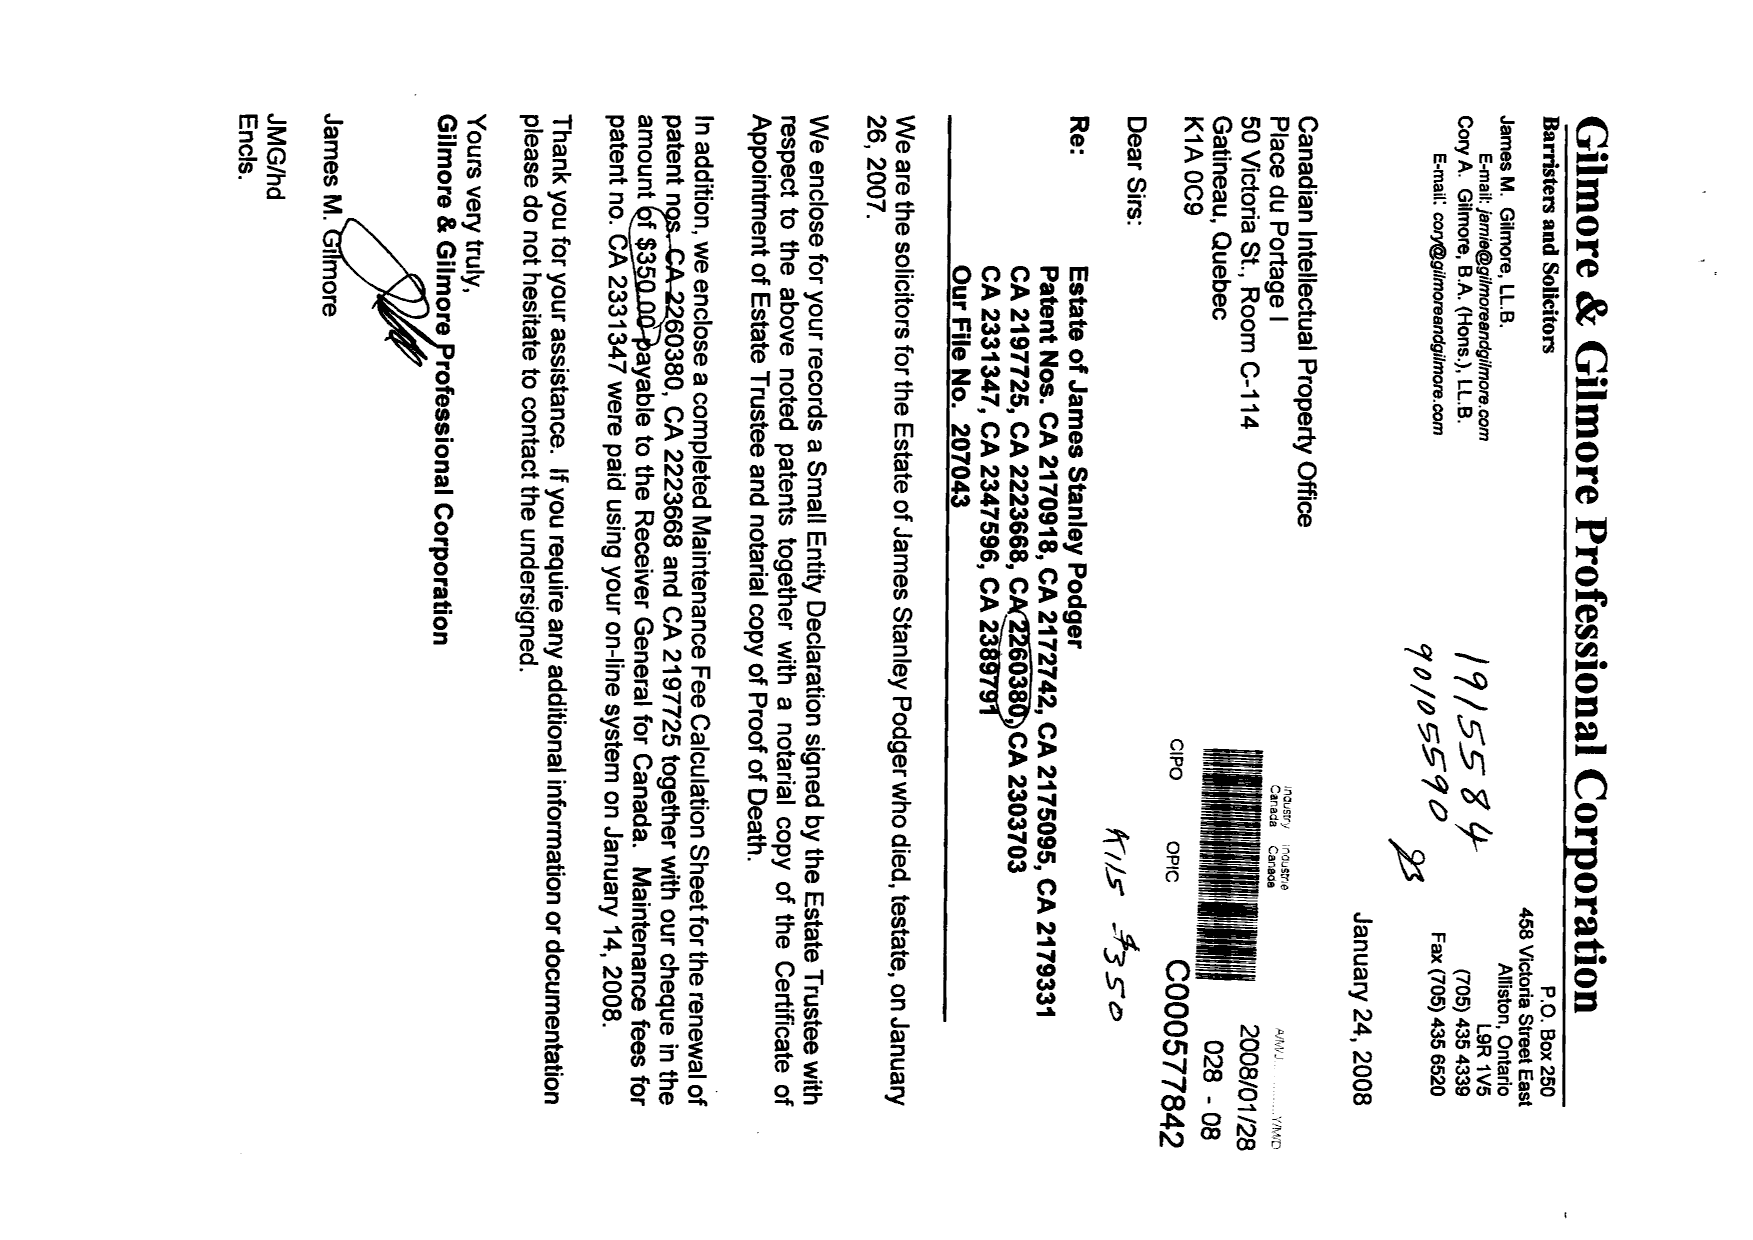 Canadian Patent Document 2197725. Correspondence 20080128. Image 1 of 13